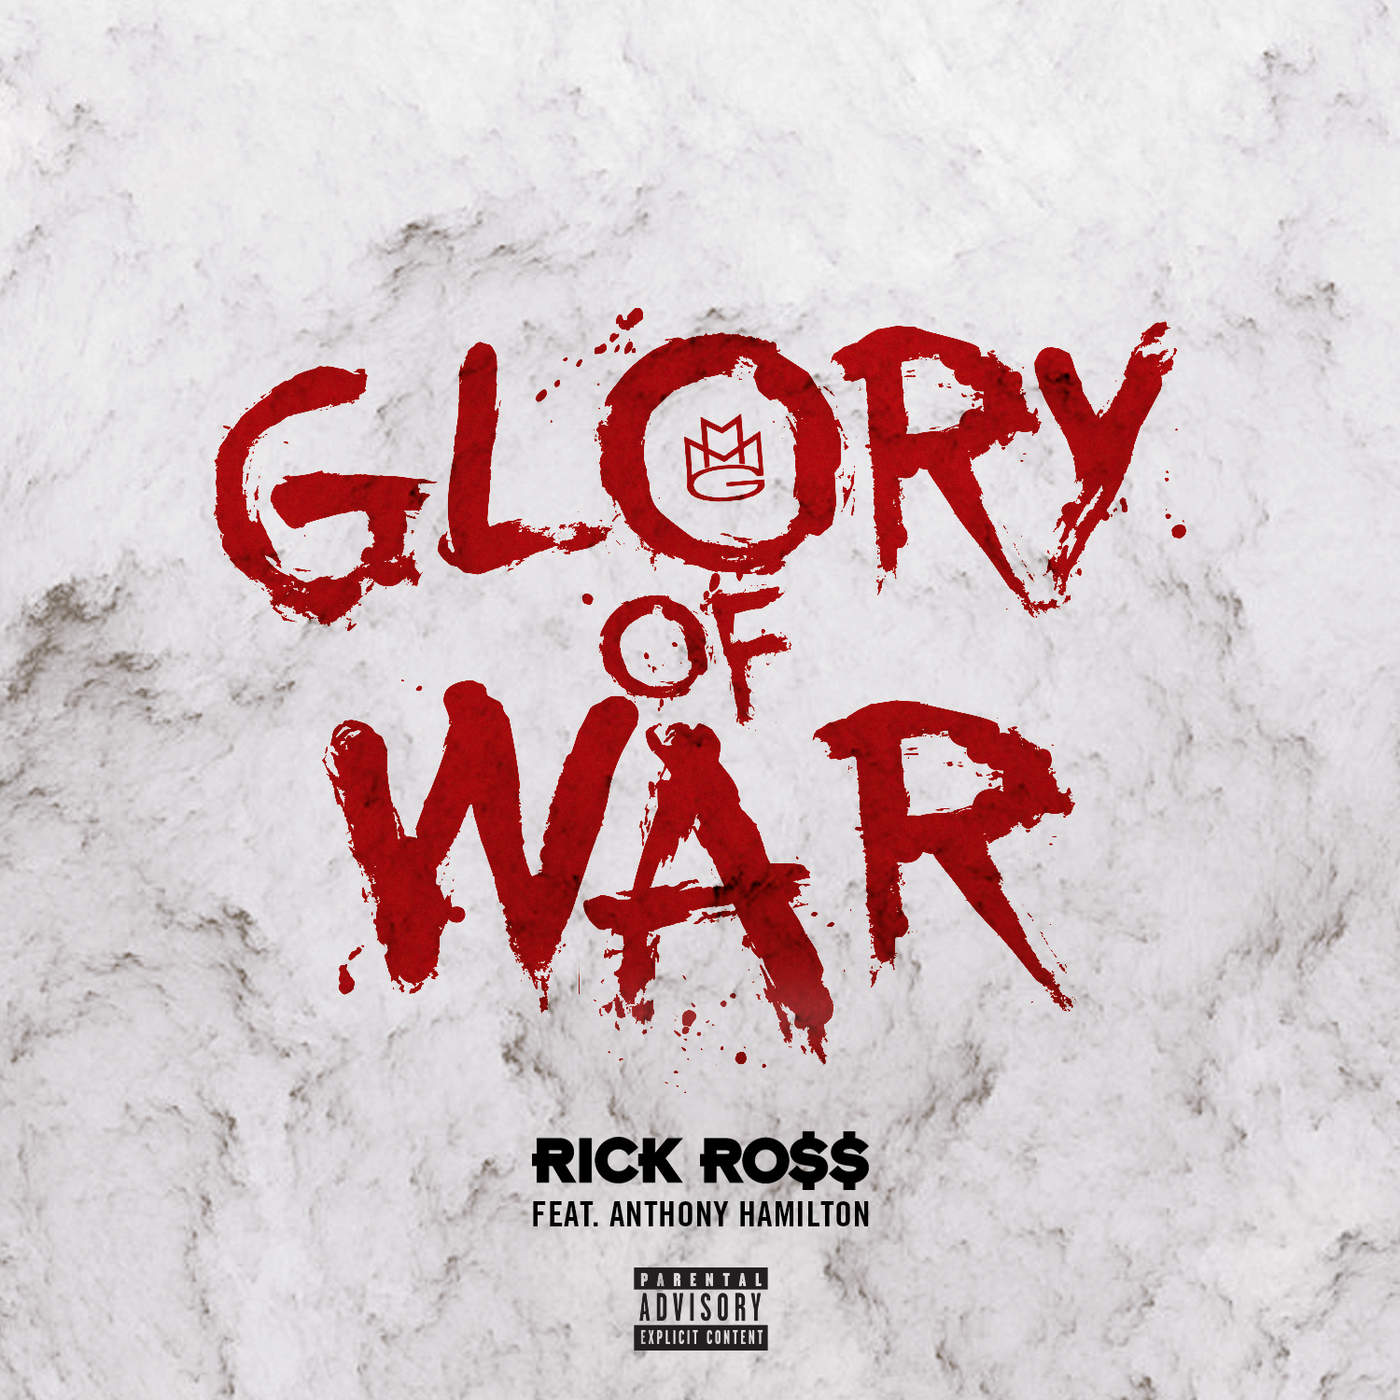 New Music: Rick Ross – “Glory Of War” Feat. Anthony Hamilton [LISTEN]